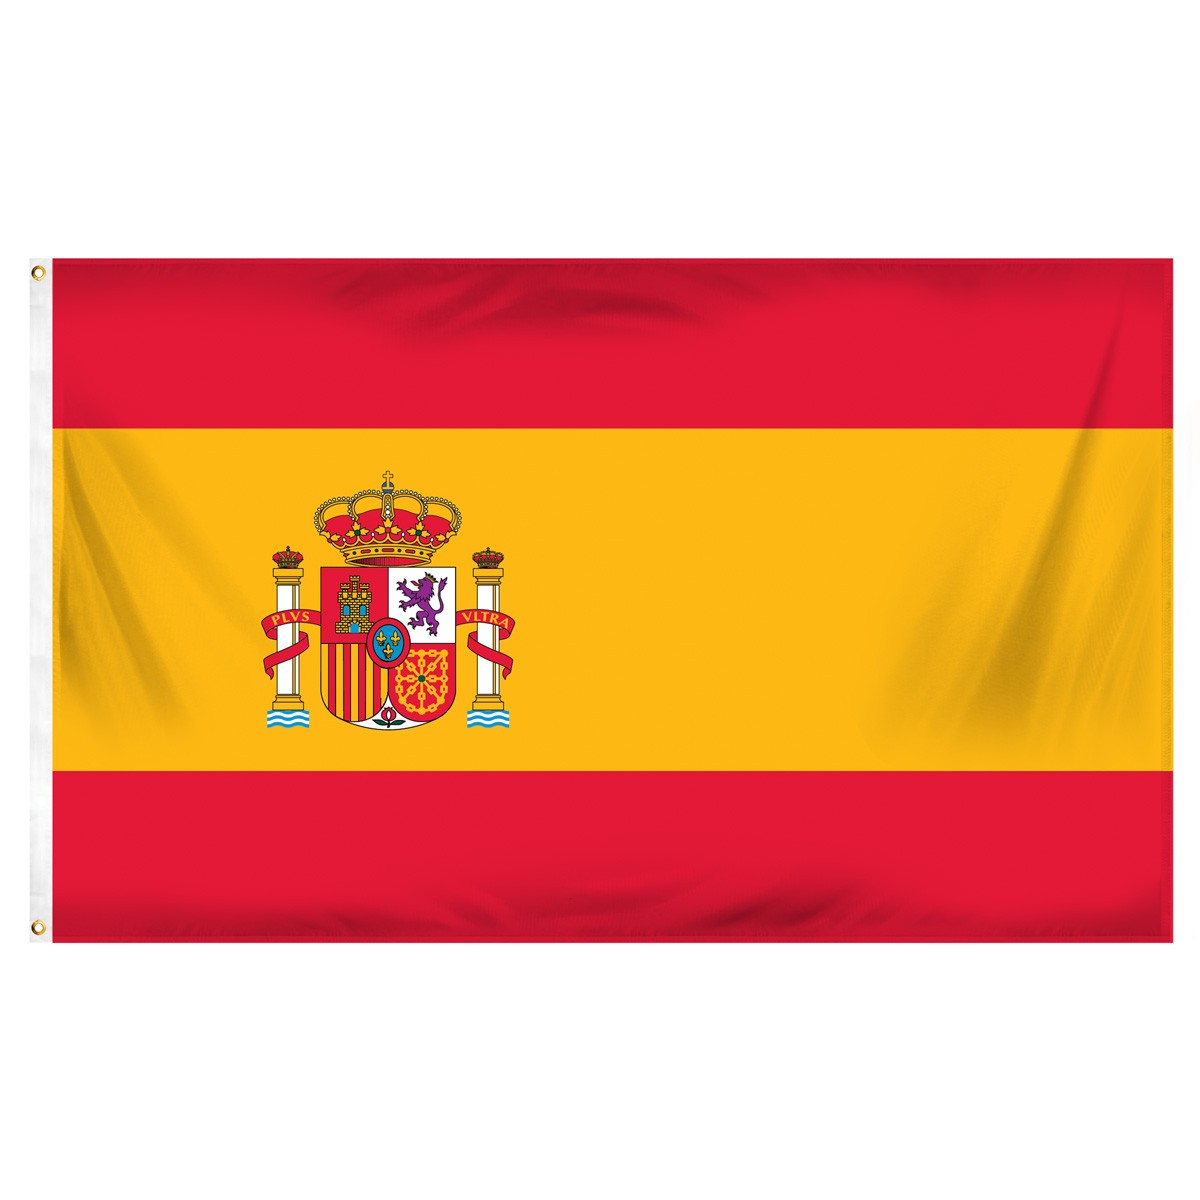 Spain Beach Flag and Sailing Flag